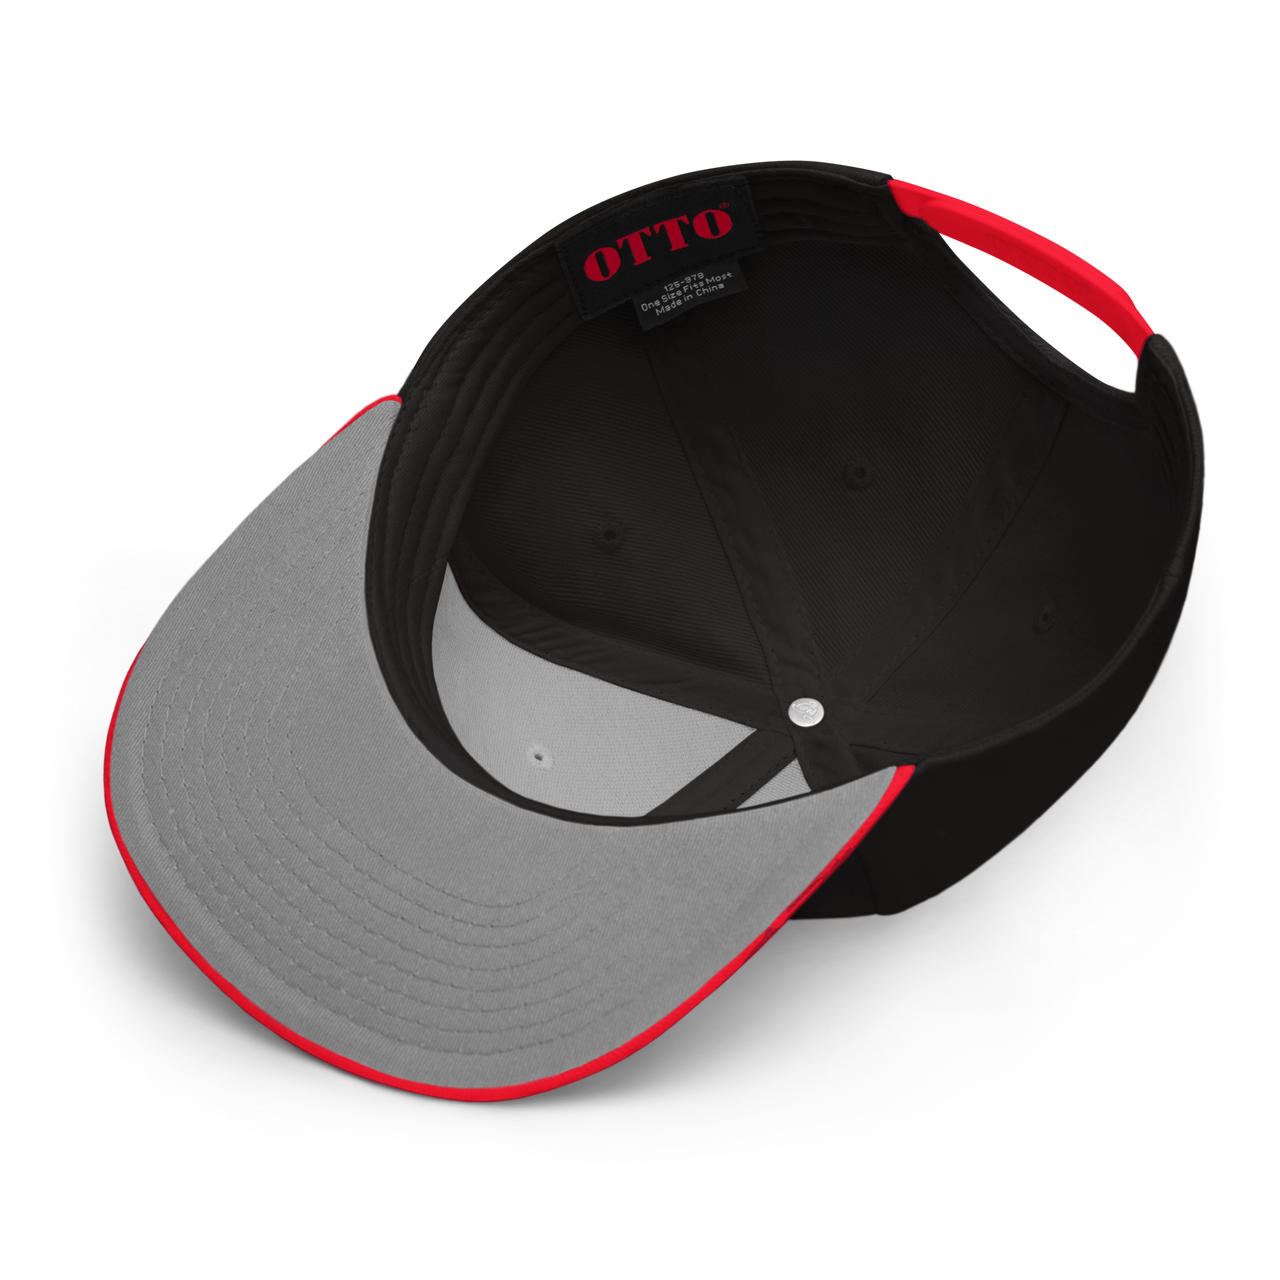 PACKS Snapback Hat - Black & Red